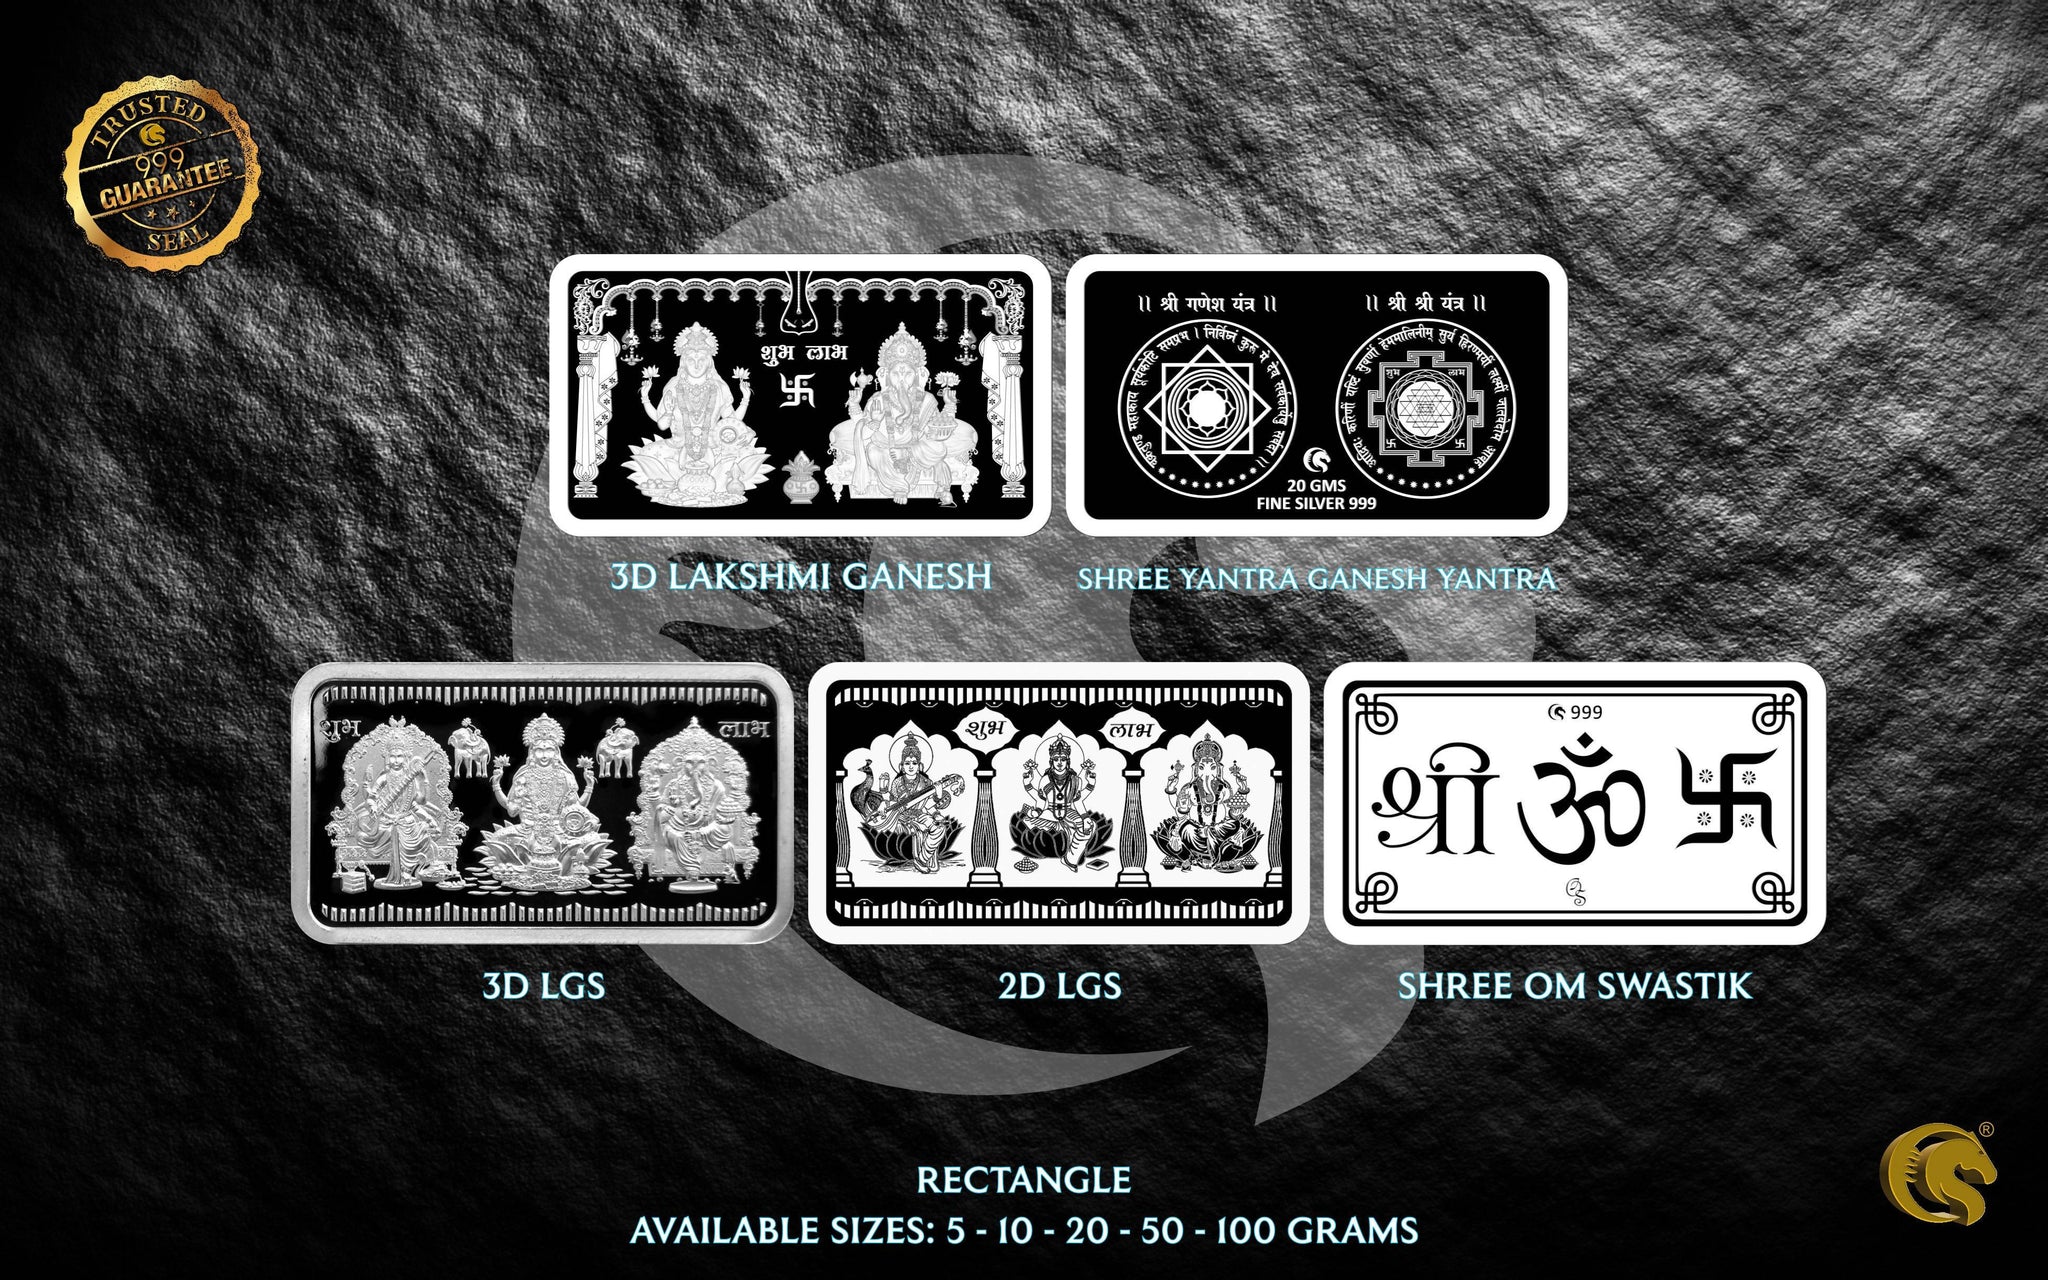 Rectangle Gods and Goddesses Silver Bars 999 | Omkar Mint Sarafa Bazar